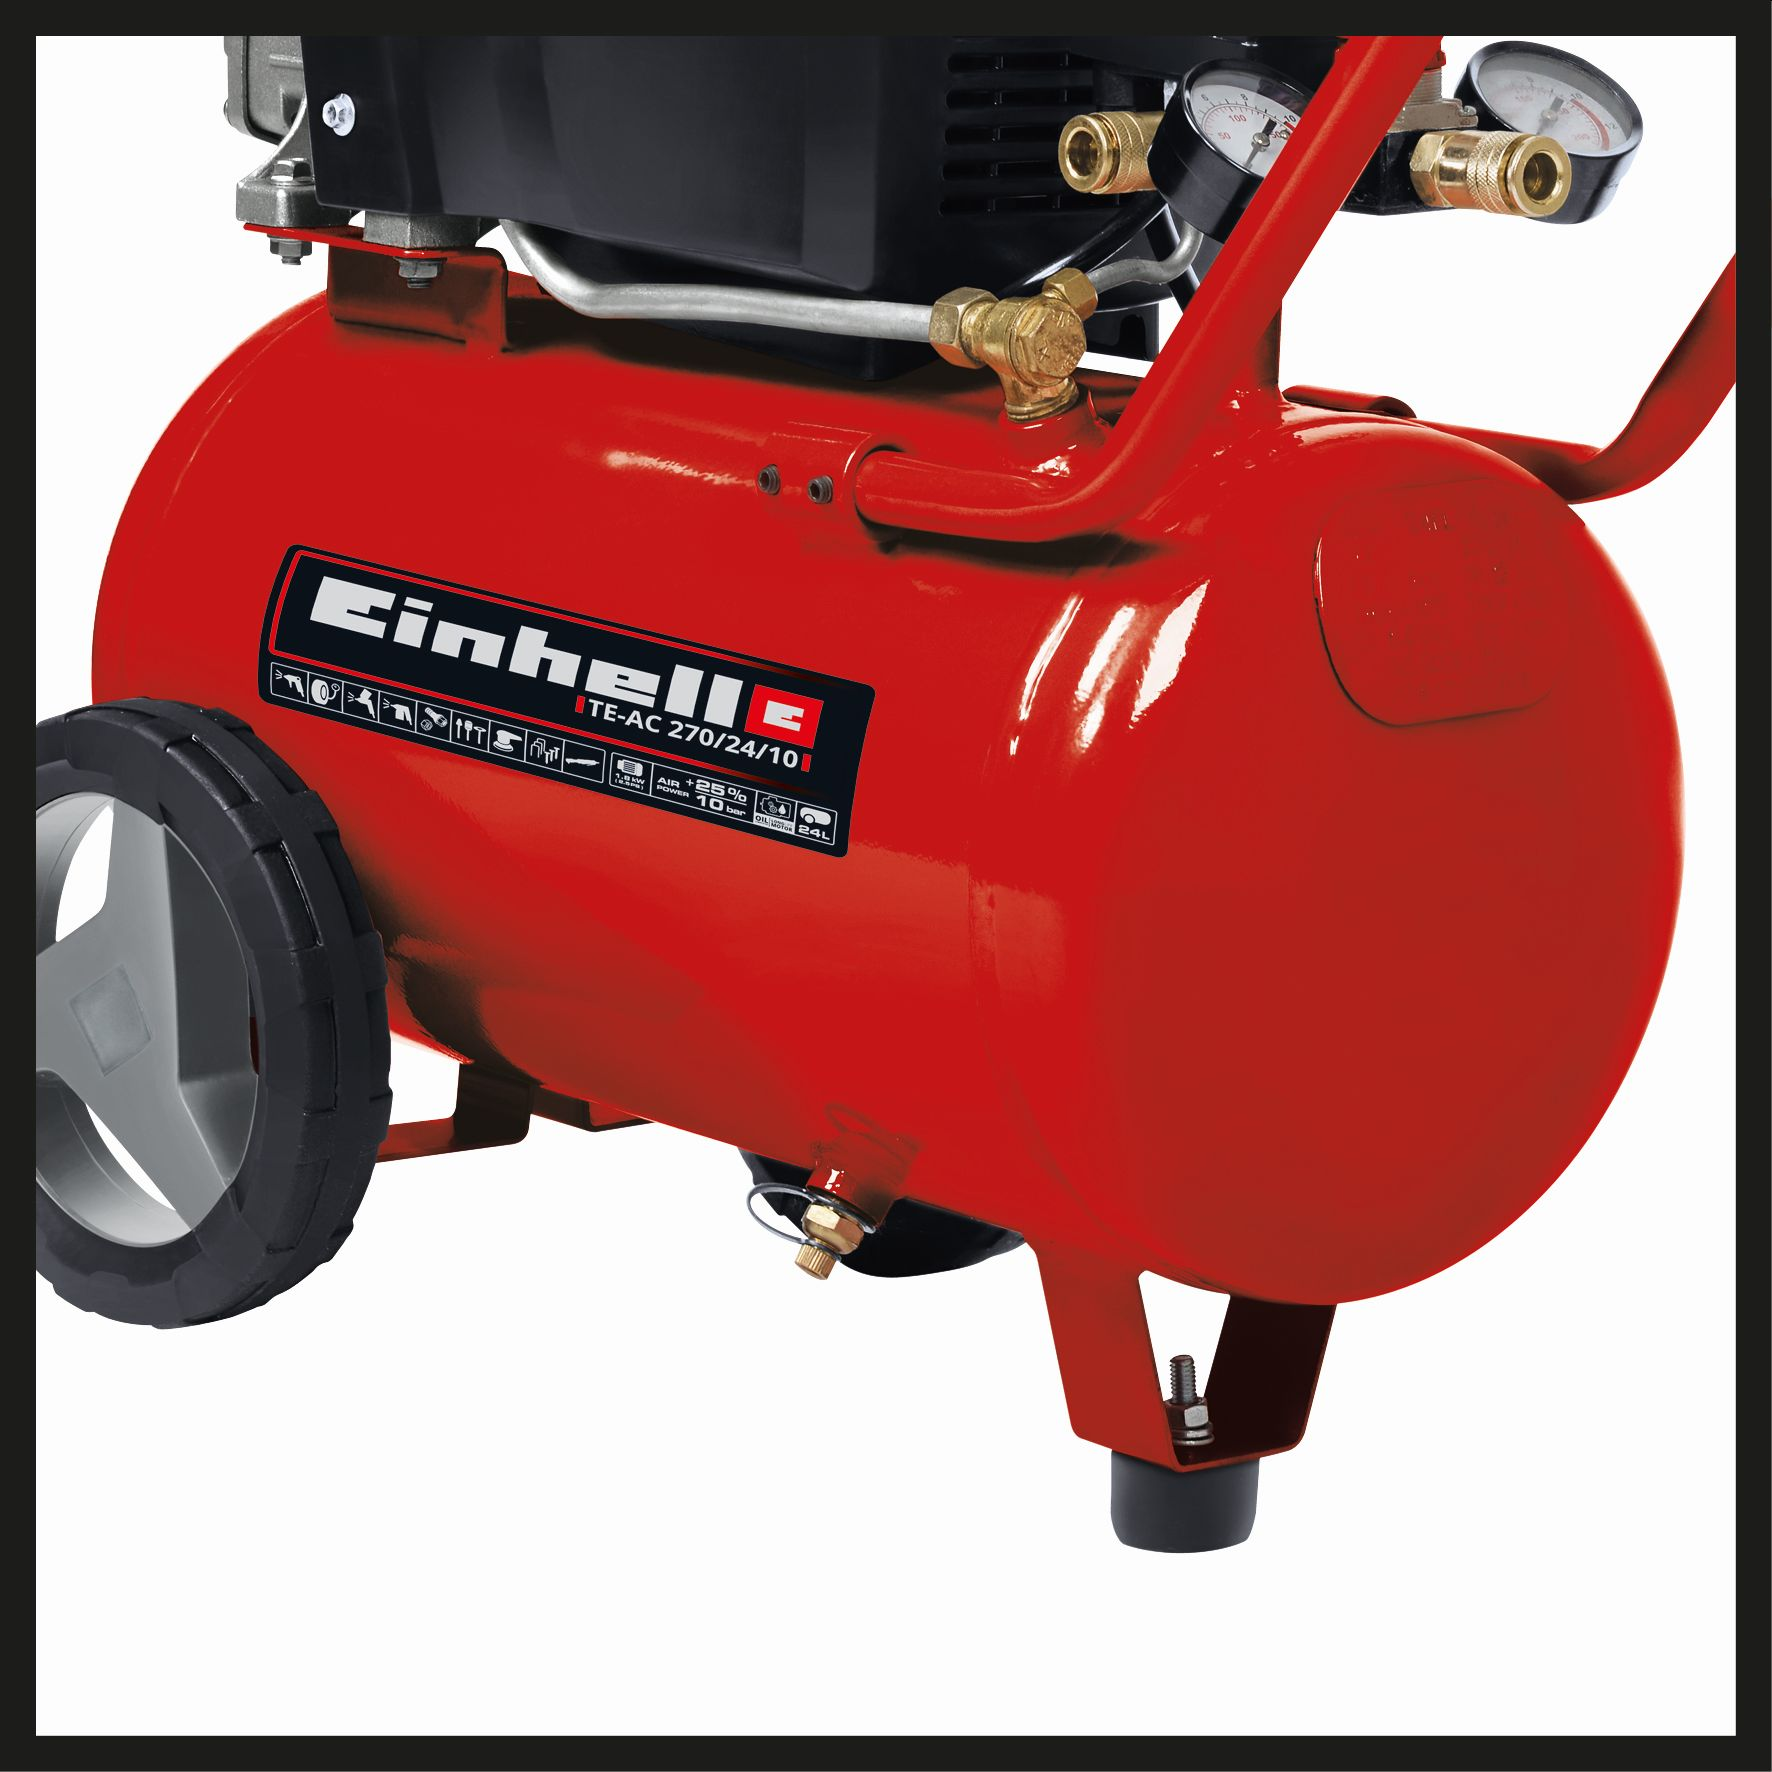 EINHELL TE-AC Kompressor, 270/24/10 Rot